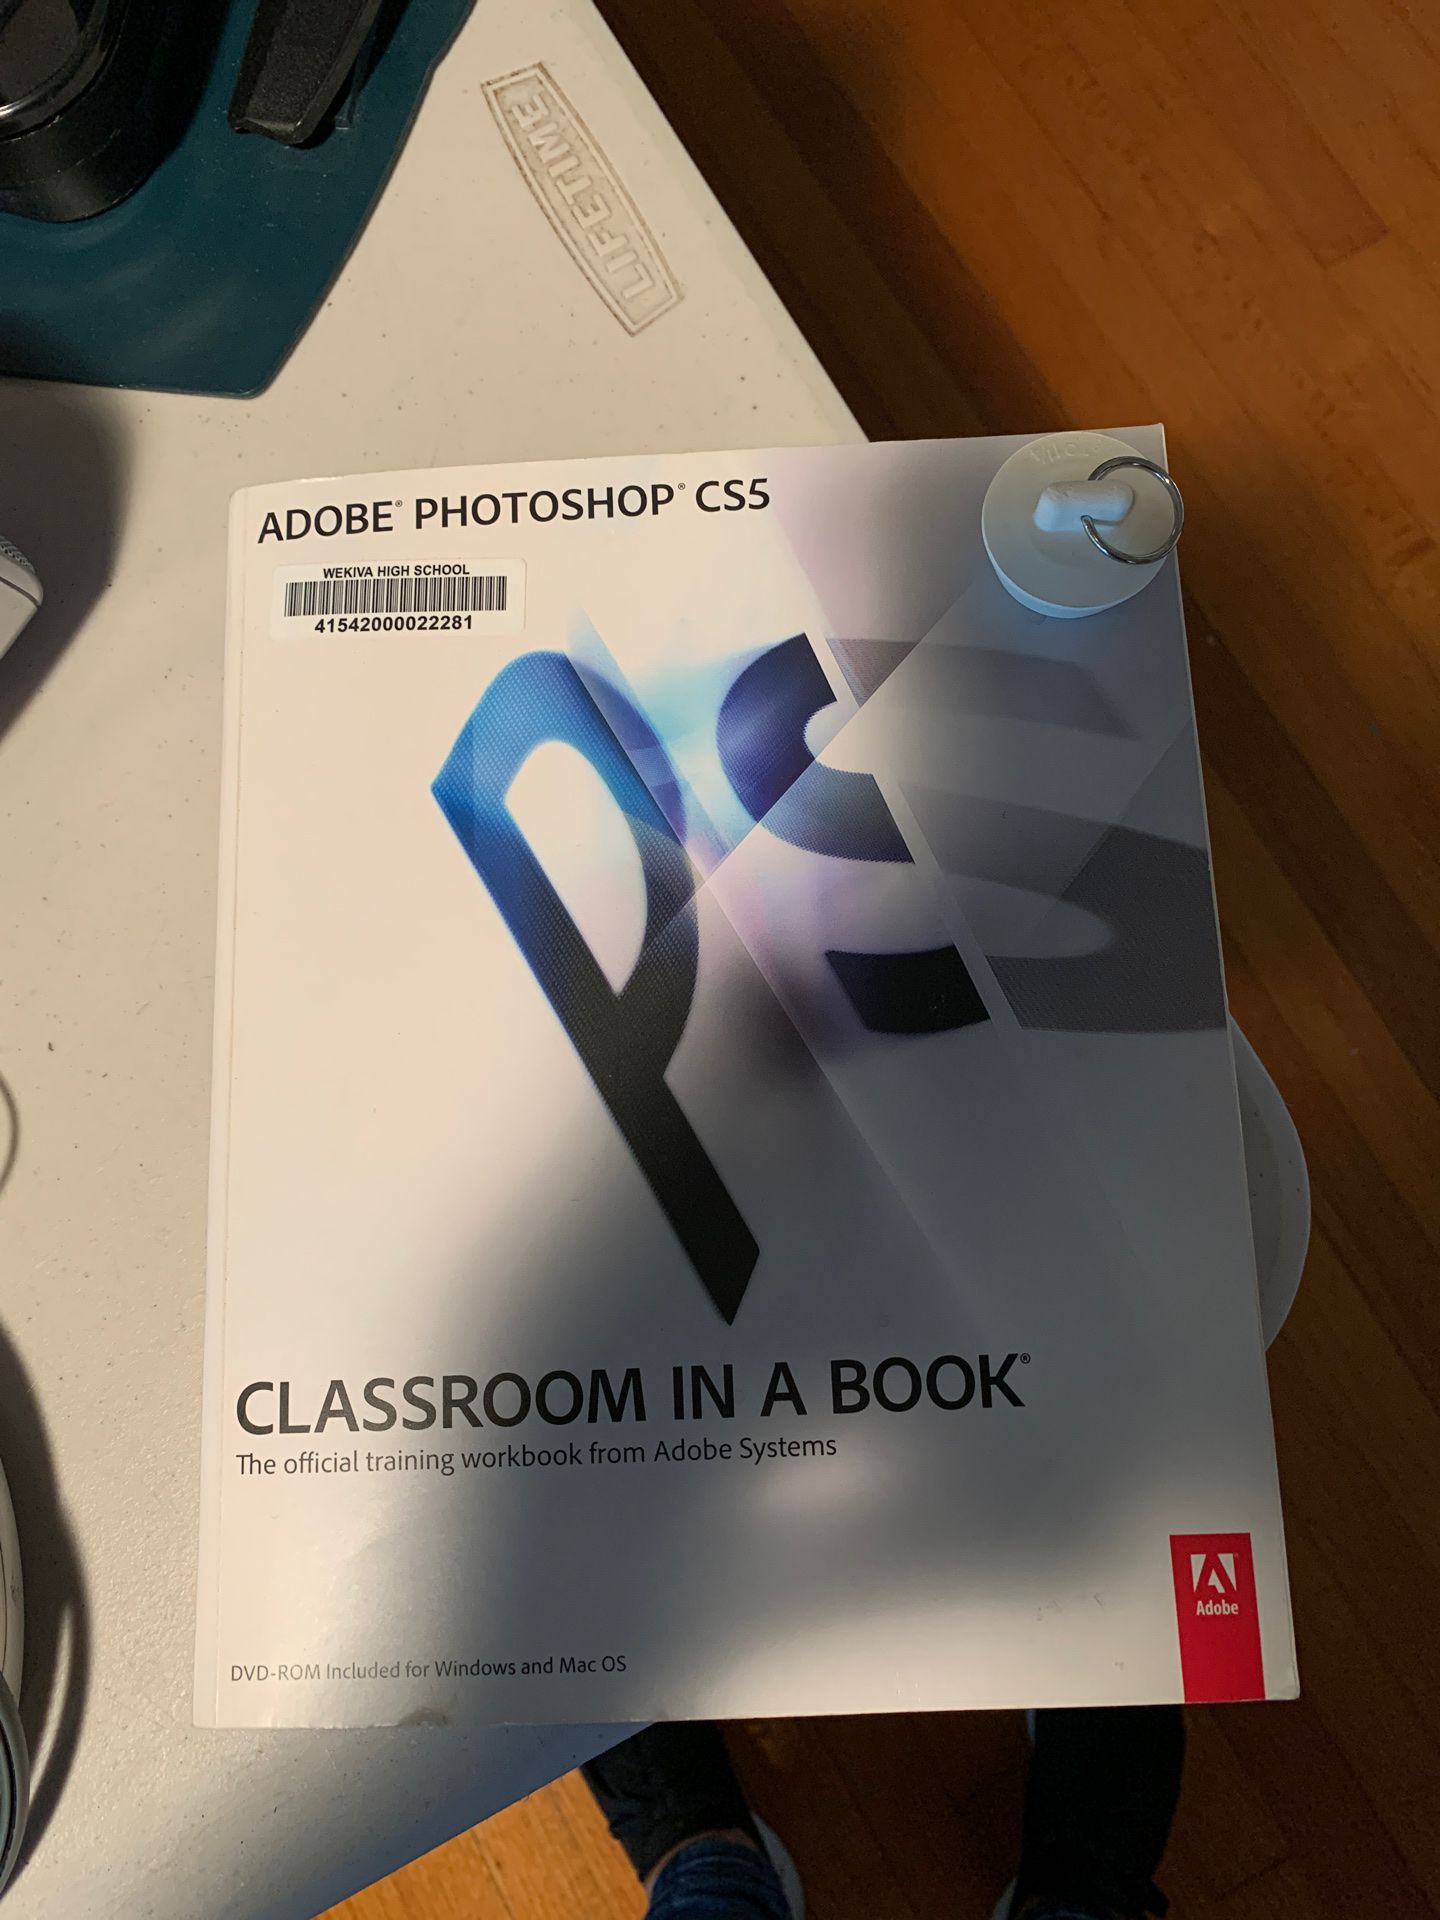 Adobe photoshop cs5 classroom in a book